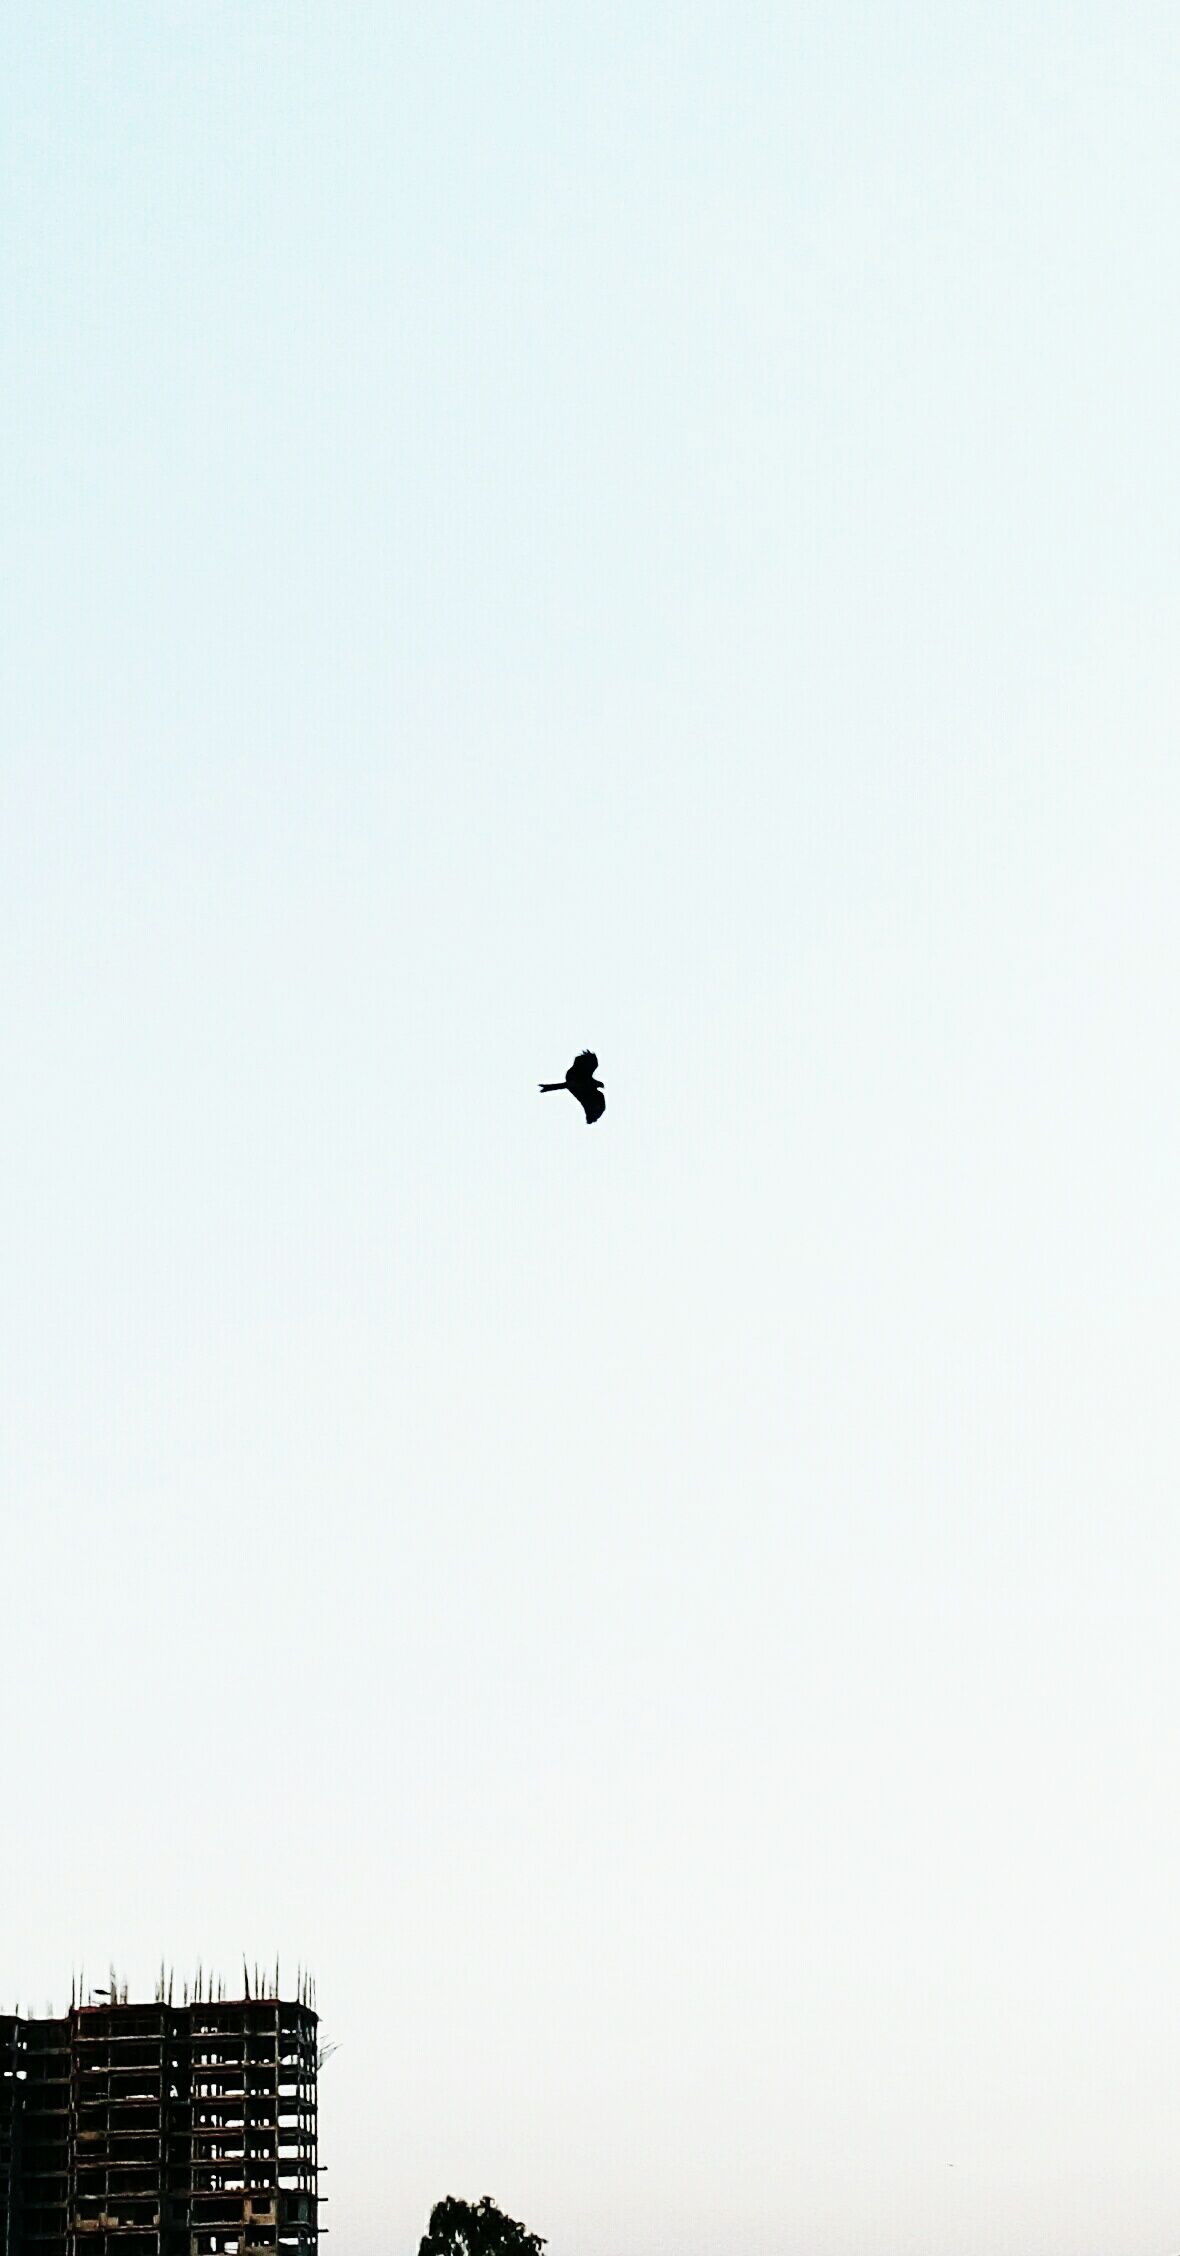 Alone, with Freedom, I Fly towards my